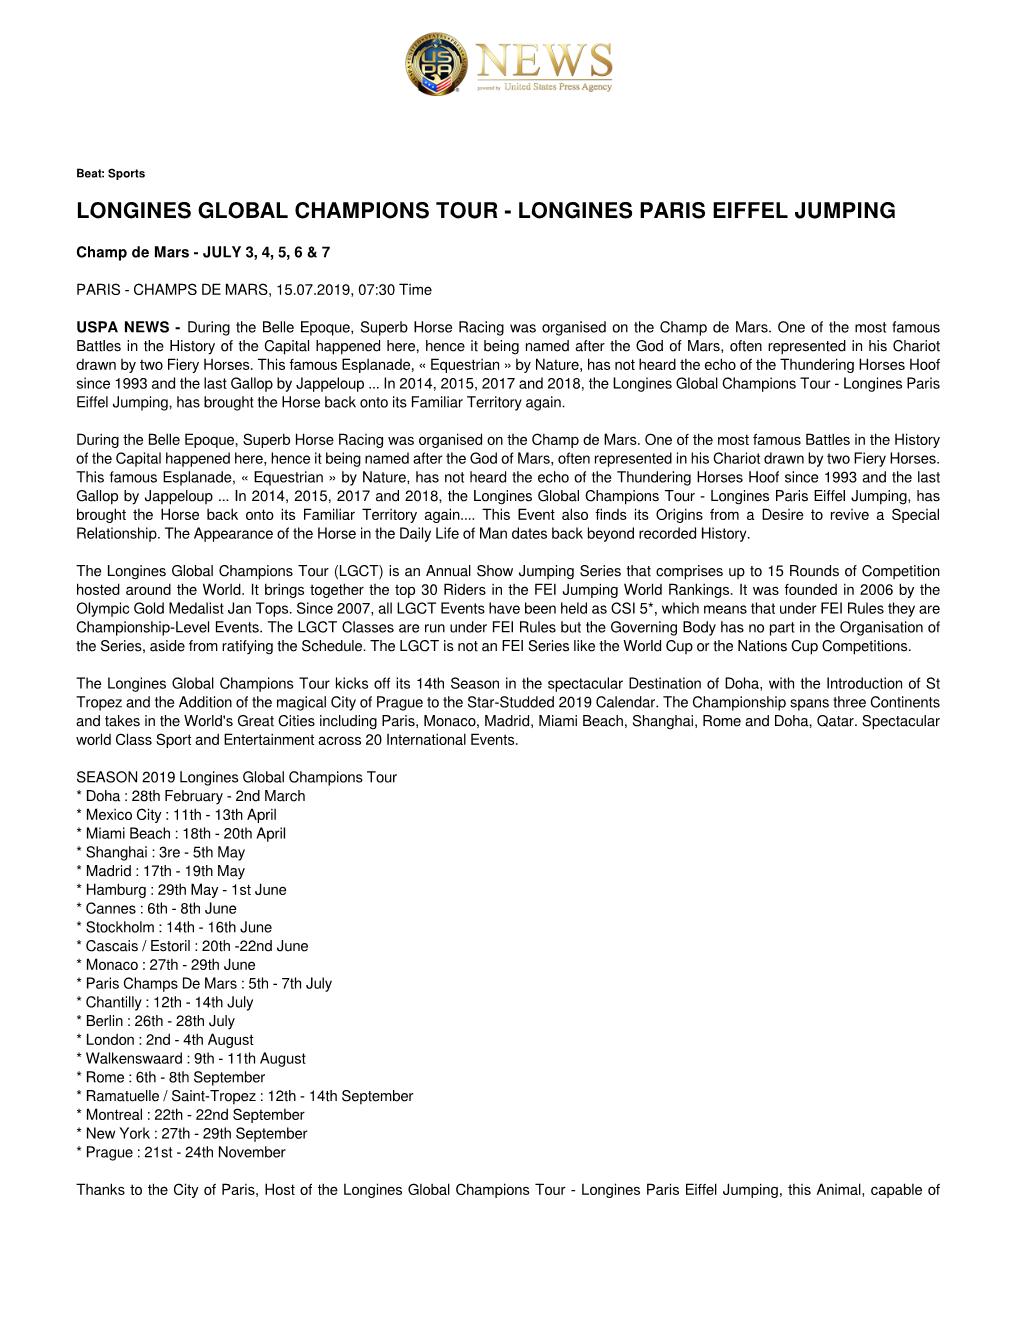 Longines Global Champions Tour - Longines Paris Eiffel Jumping